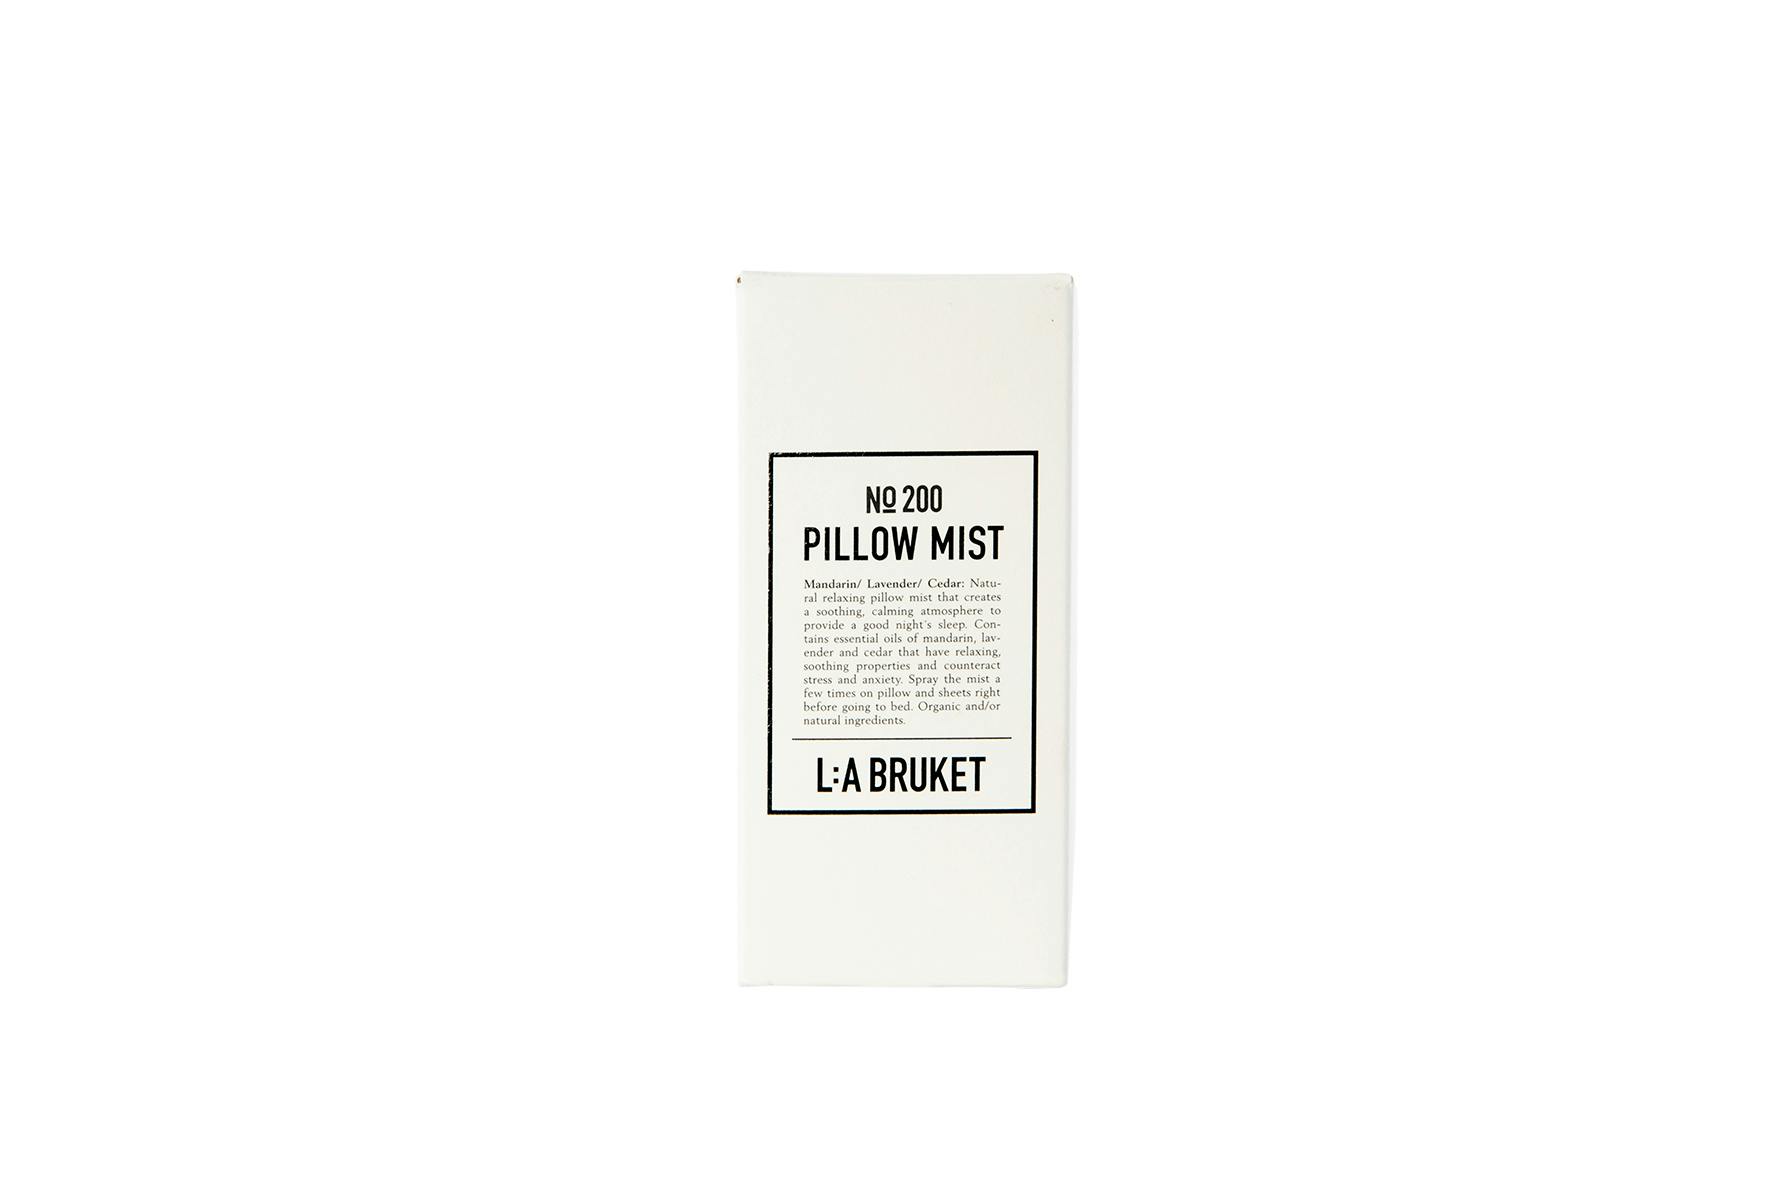 Pillow spray, pillow mist, aromatherapy, linen spray, lavender, cedar, L:A Bruket, Nordic, organic home